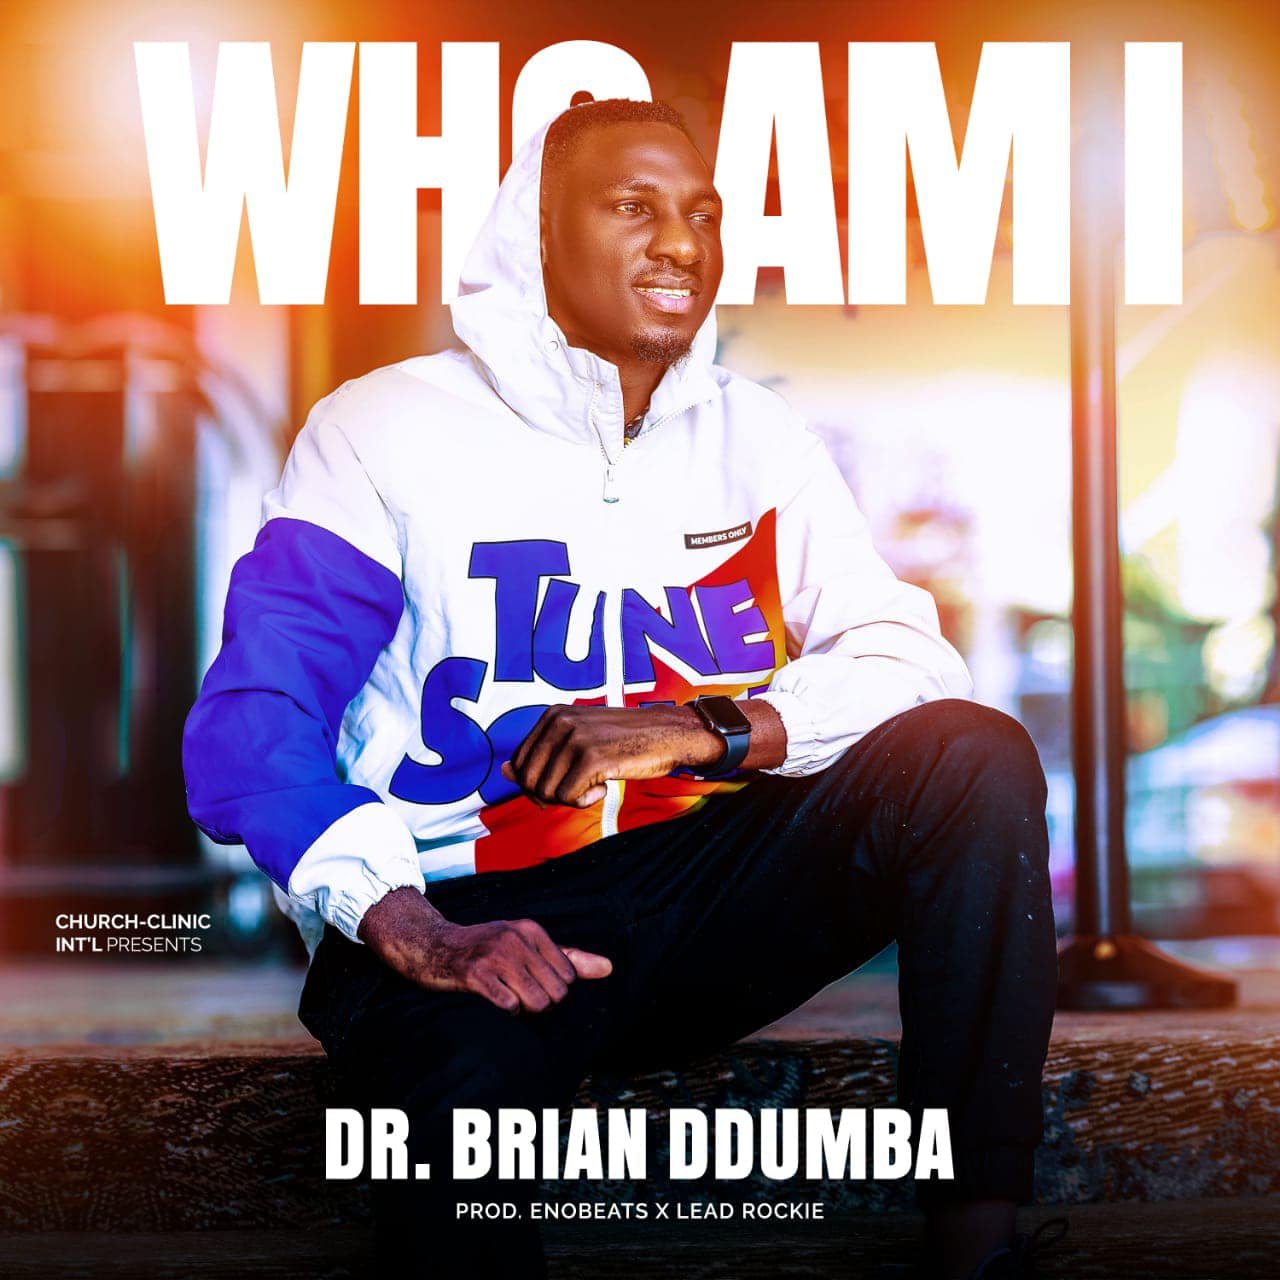 Dr Brian Ddumba